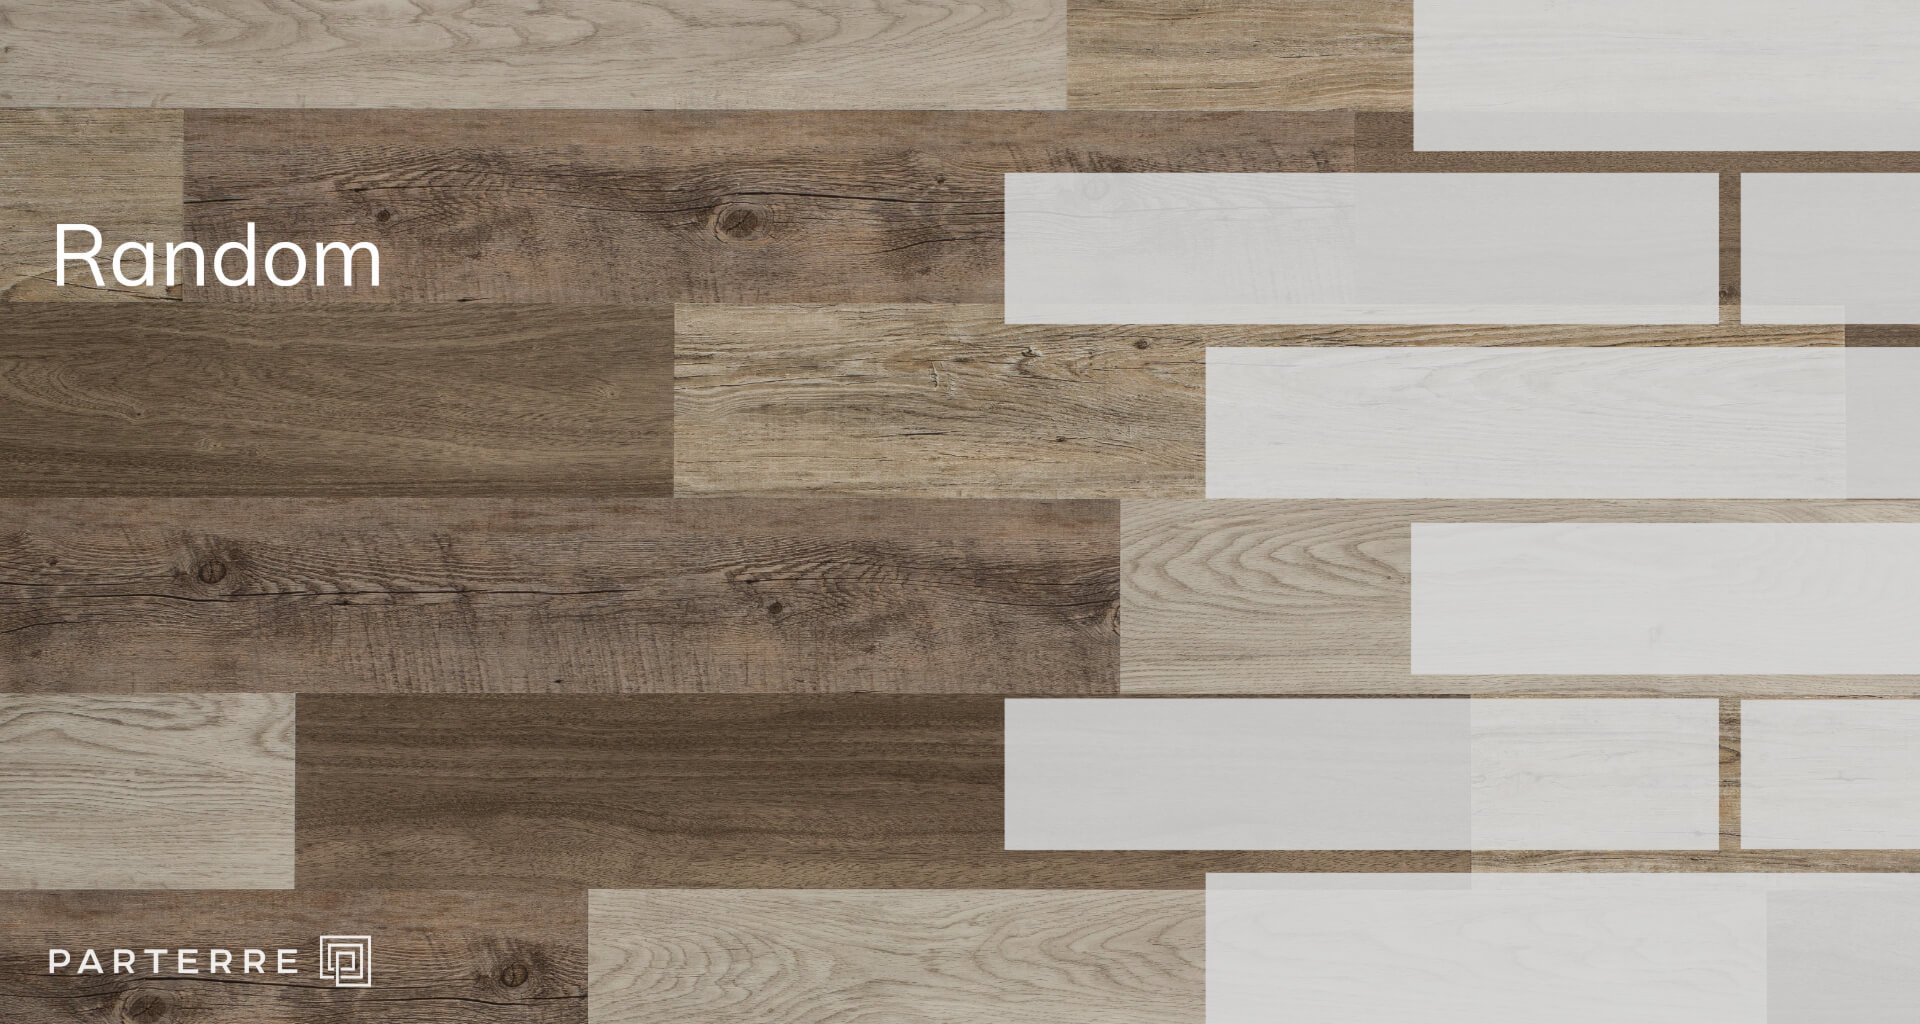 9 Vinyl Flooring Patterns For Your Next, Vinyl Flooring Patterns For Kitchens